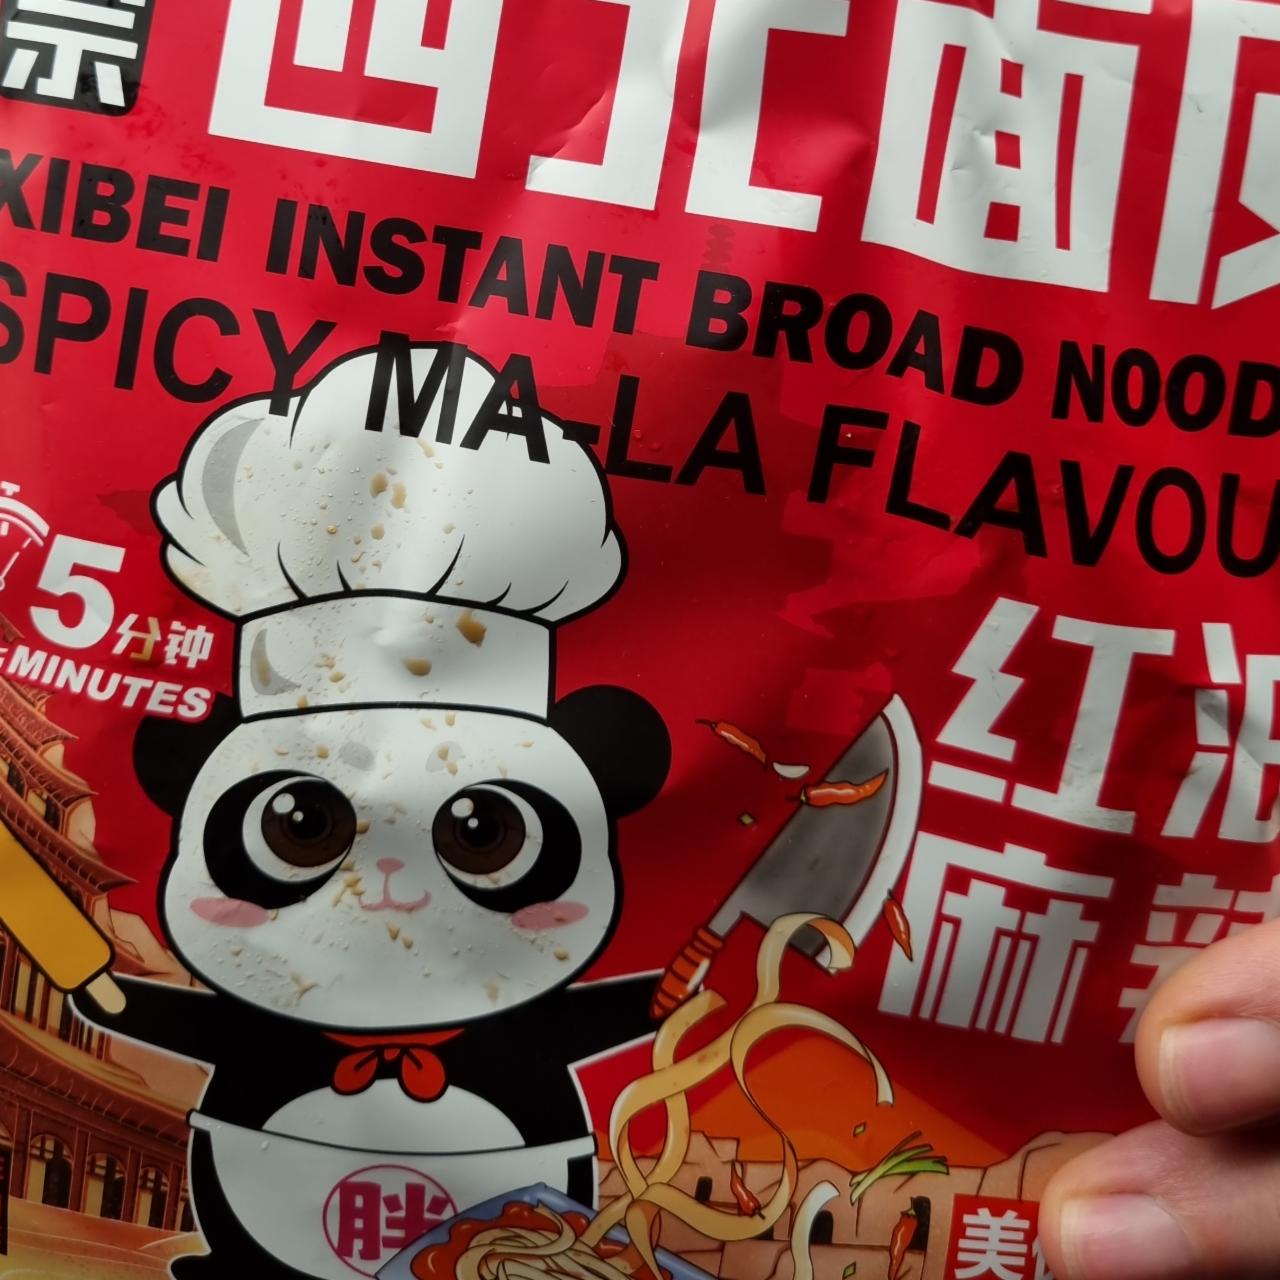 Fotografie - Xibei Instant Broad Noodles Spicy Ma-la Bashu Family